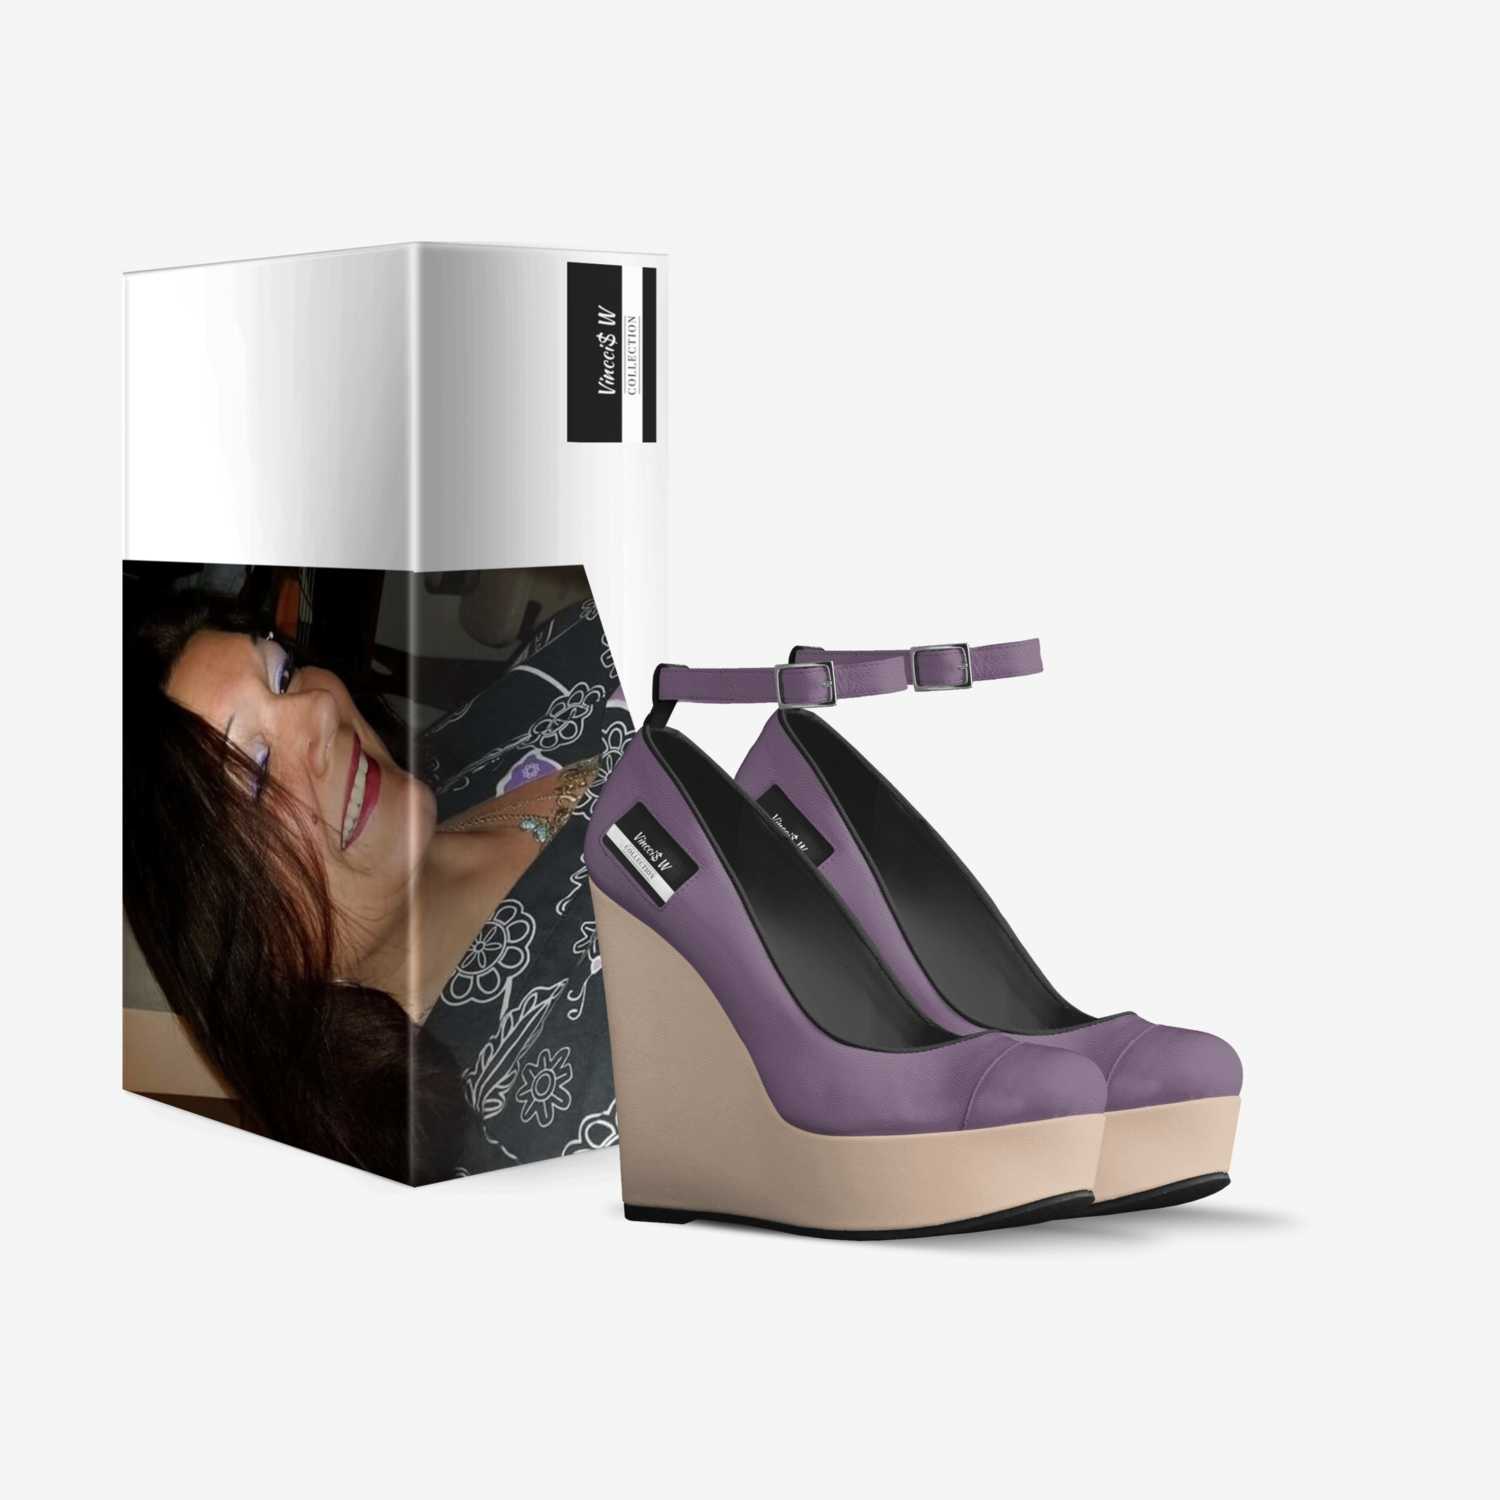 Vincci$ W custom made in Italy shoes by Leovincci | Box view